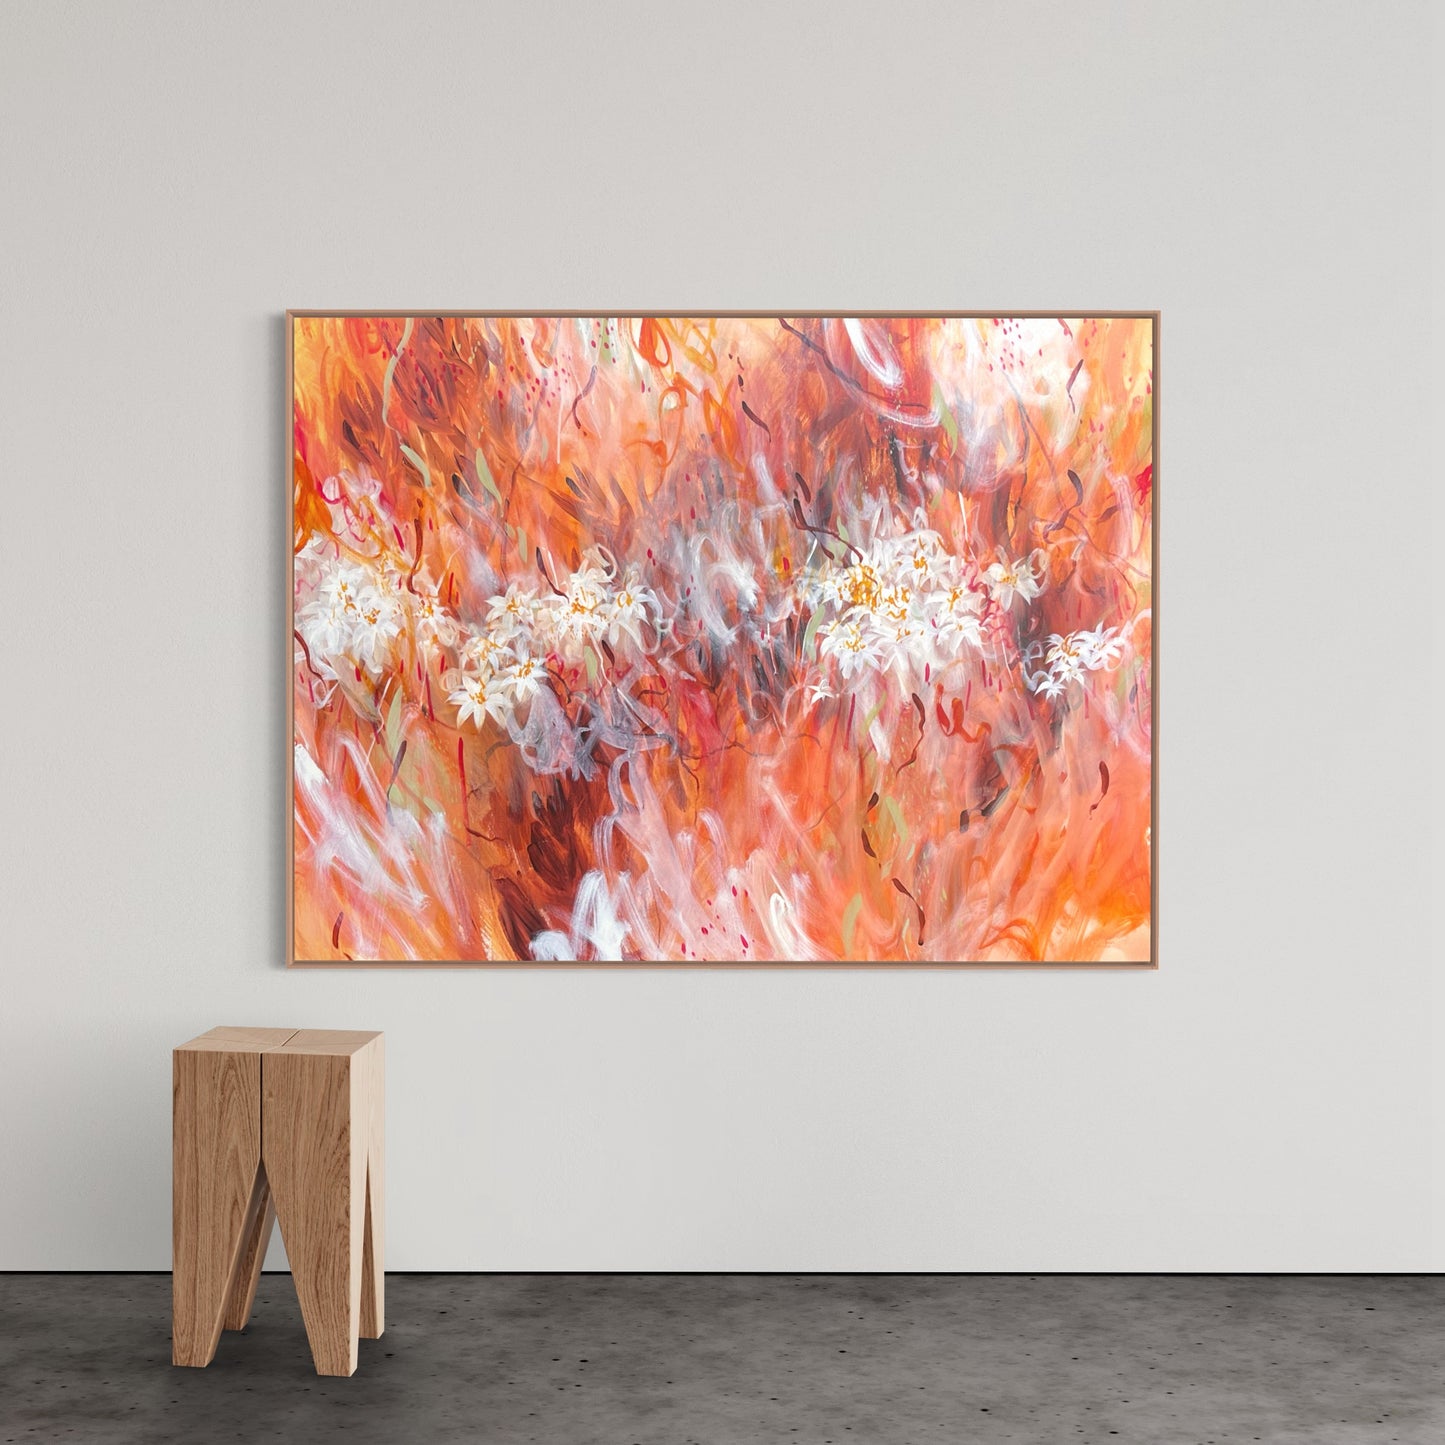 The low lying smoke - acrylic artwork on canvas, 120x100cm